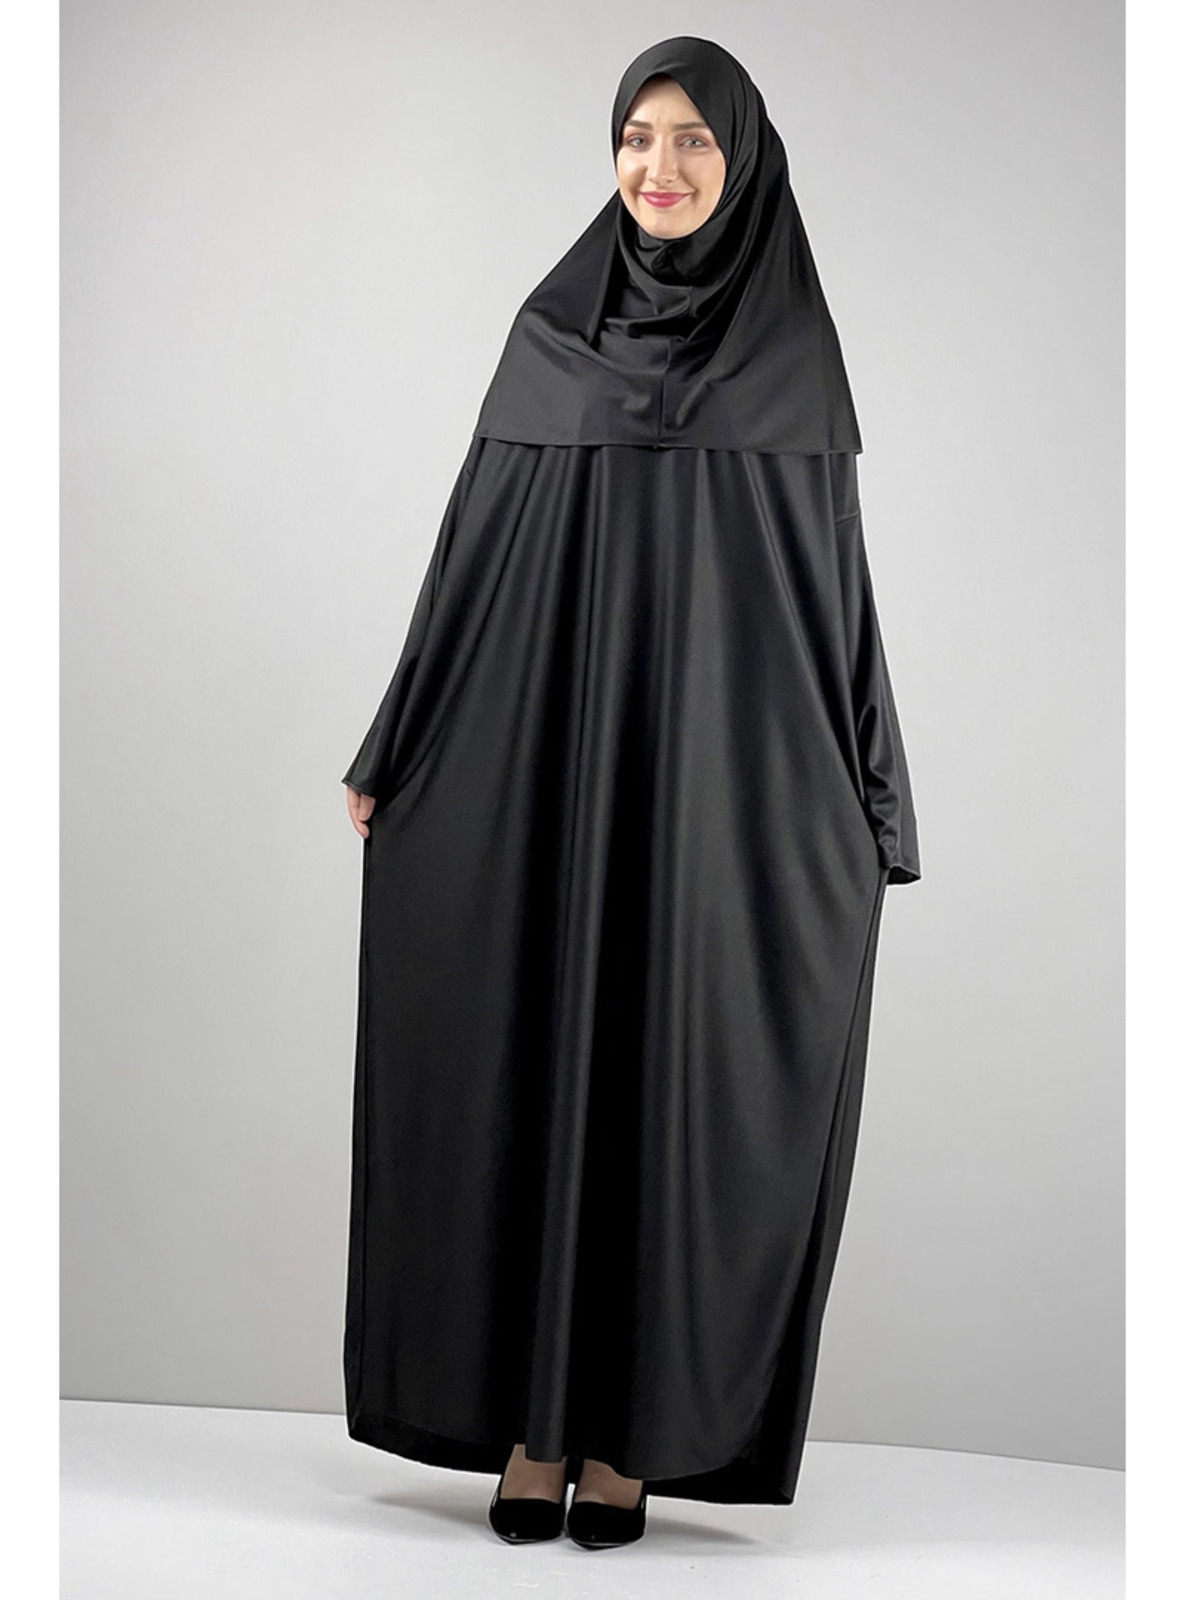 Black - Prayer Clothes